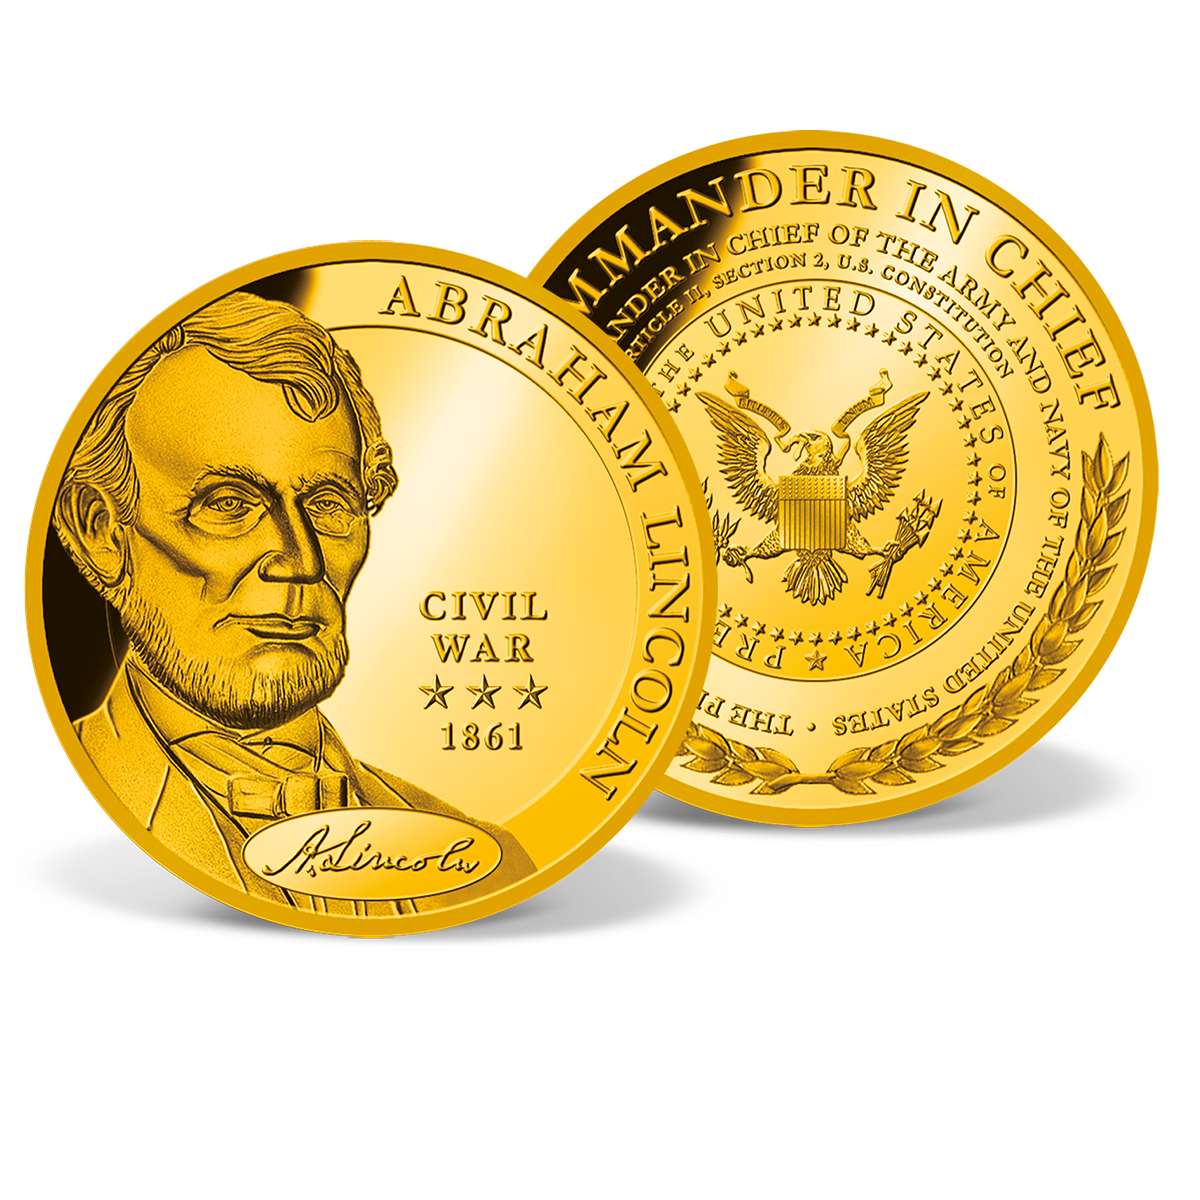 AMERICAN CIVIL WAR JFK Half Dollar Coin 150th Anniversary Abraham Lincoln